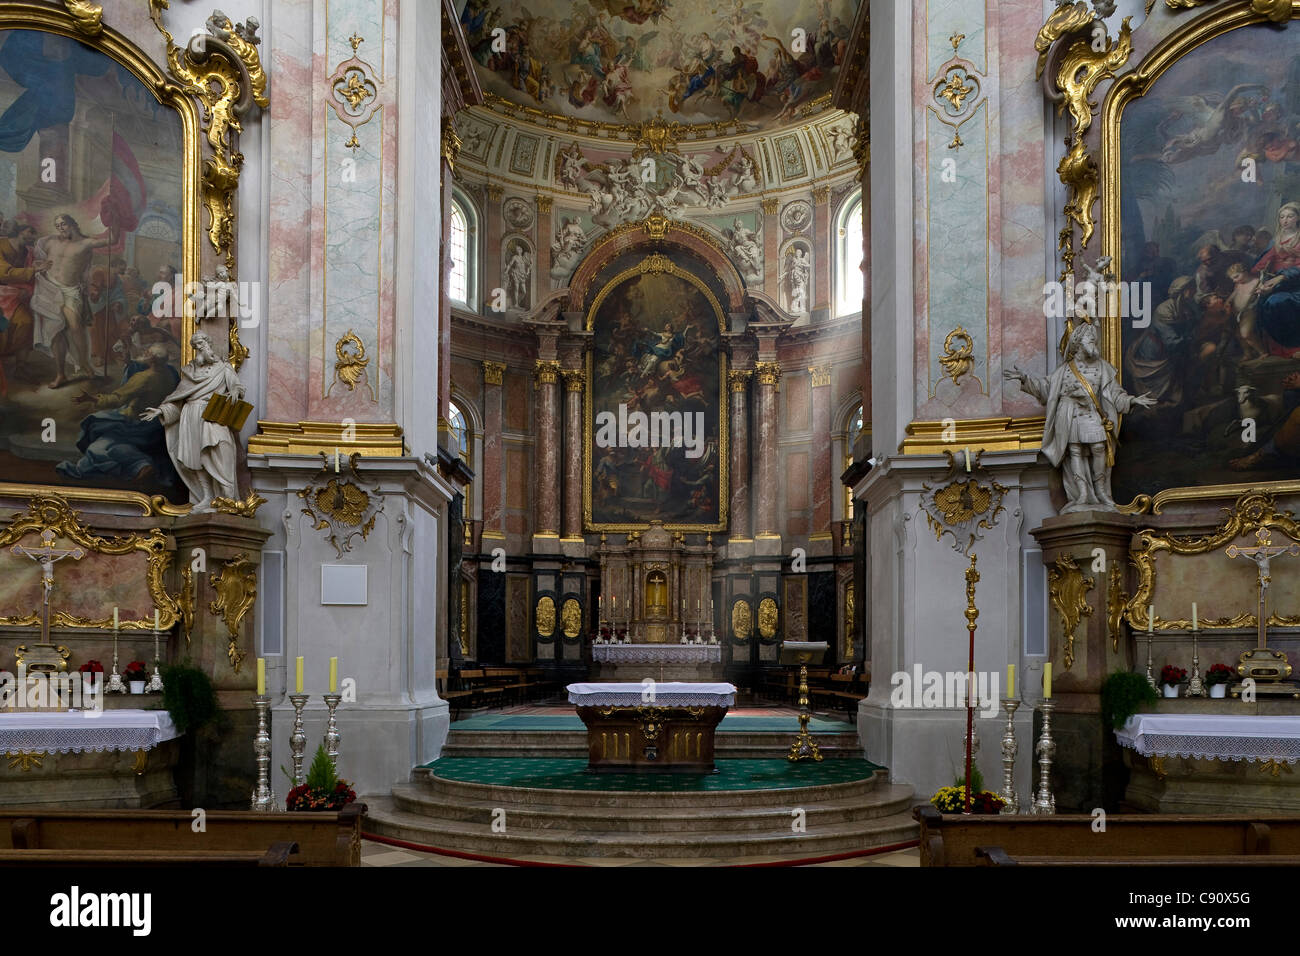 Ettal minster, Benedictine monastry, Ettal, Bavaria, Germany, Europe Stock Photo